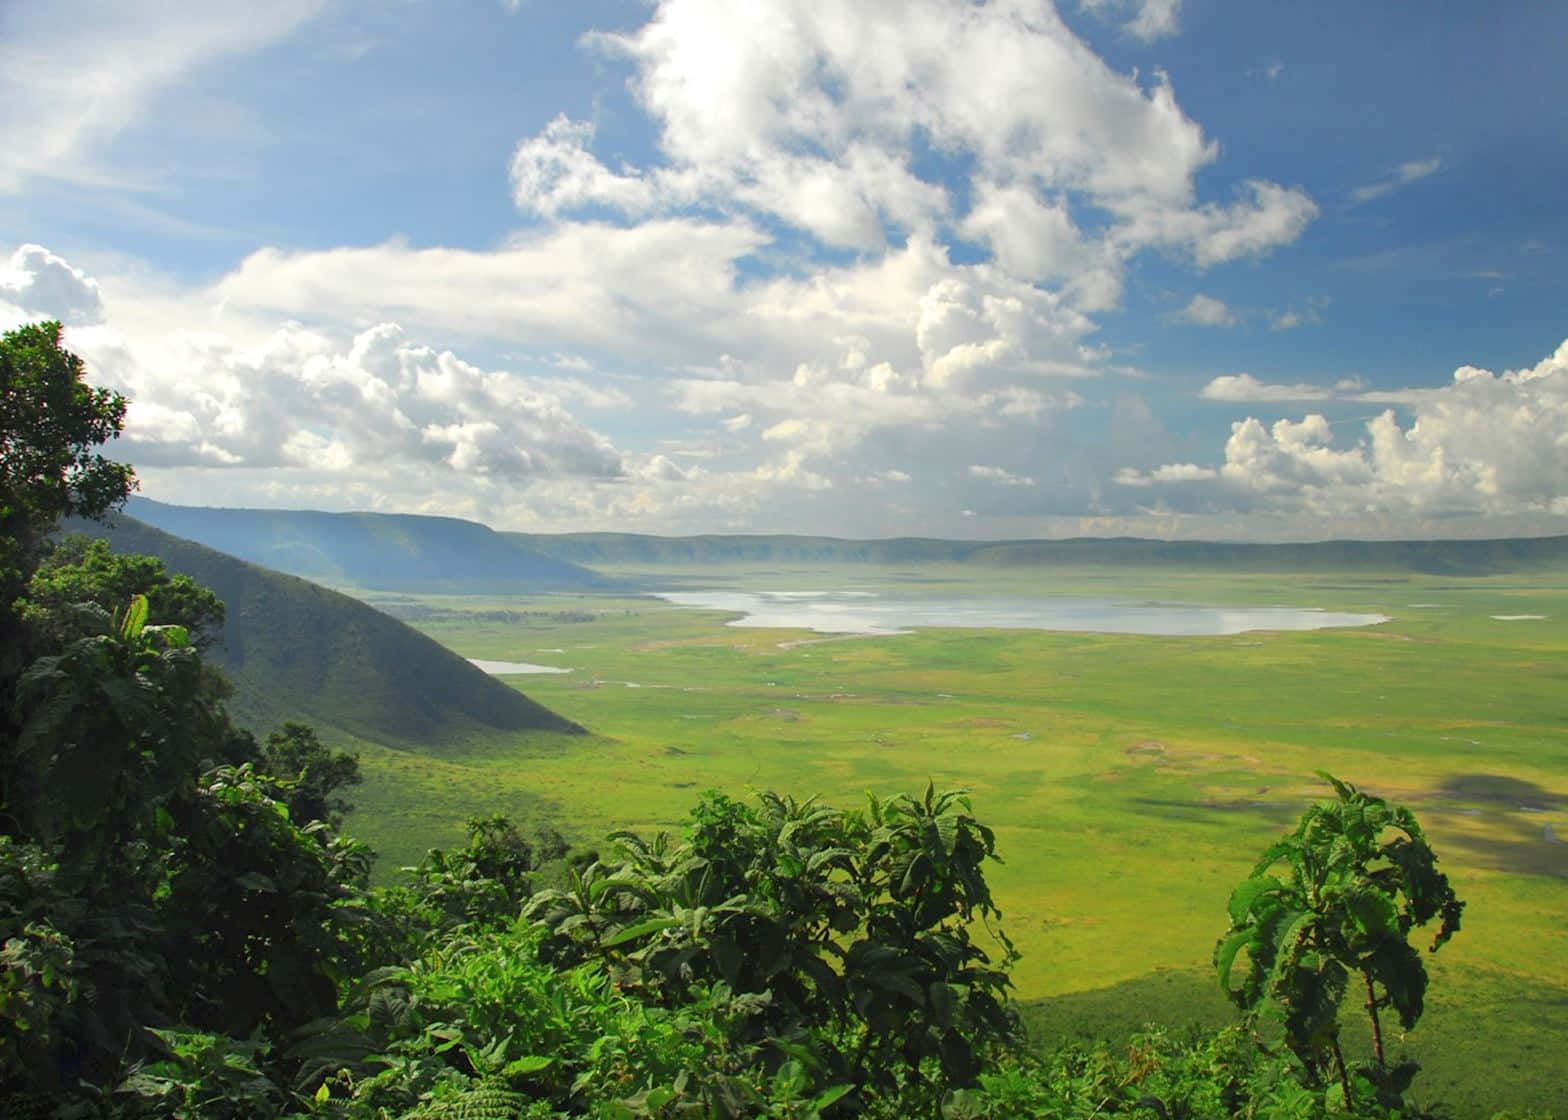 Sceneri fra Ngorongoro Crater Conservation Area i Tanzania Wallpaper